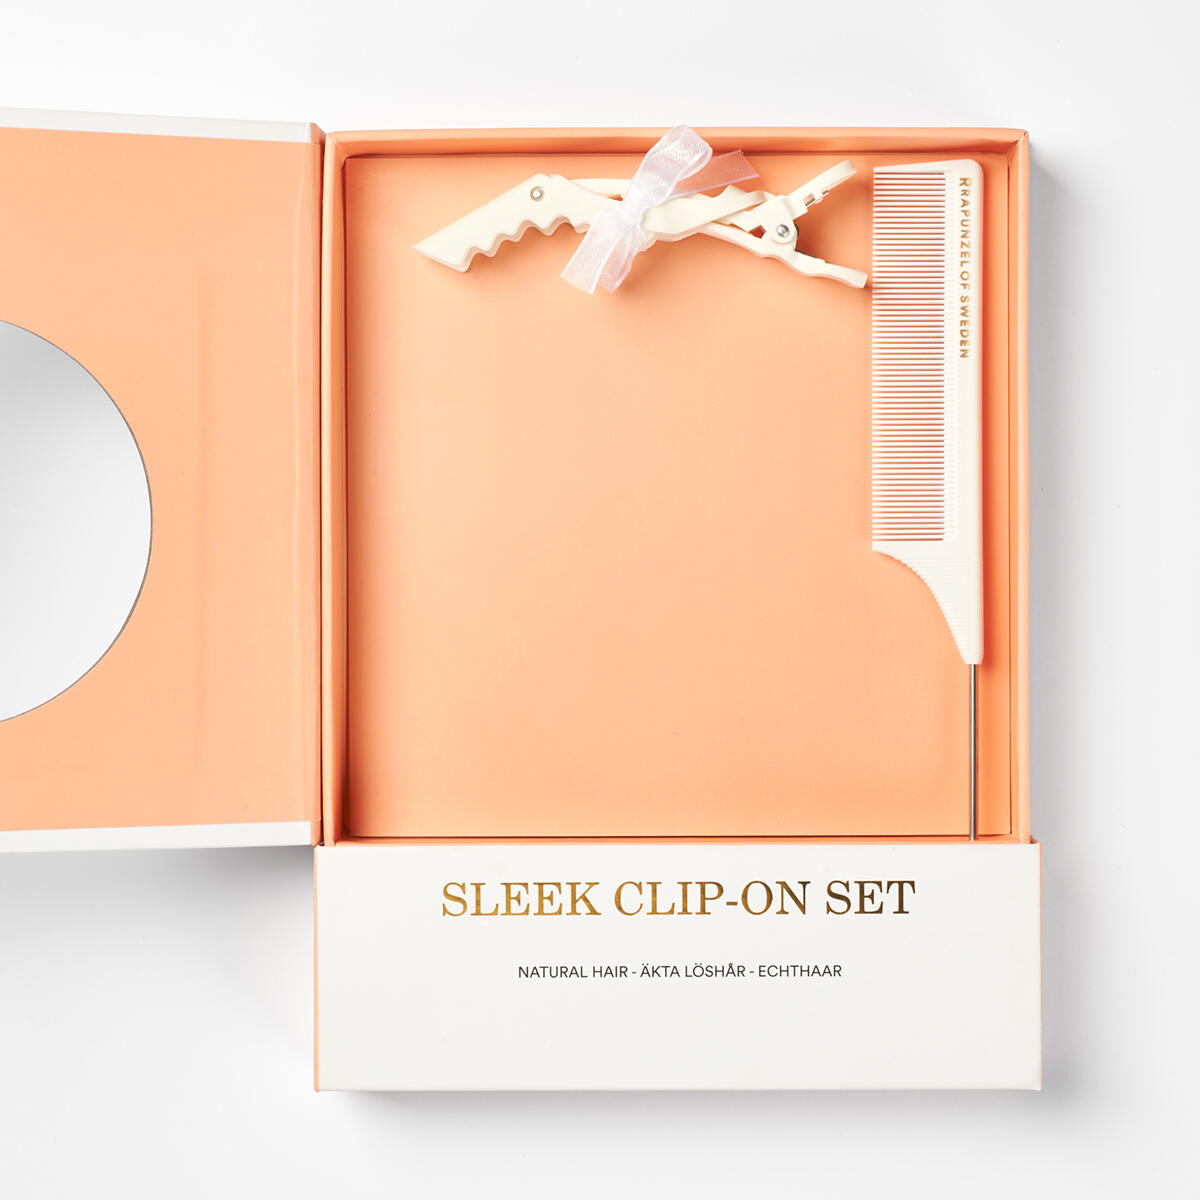 Sleek Clip-on set B5.0/8.3 Brownish Blonde Balayage 50 cm